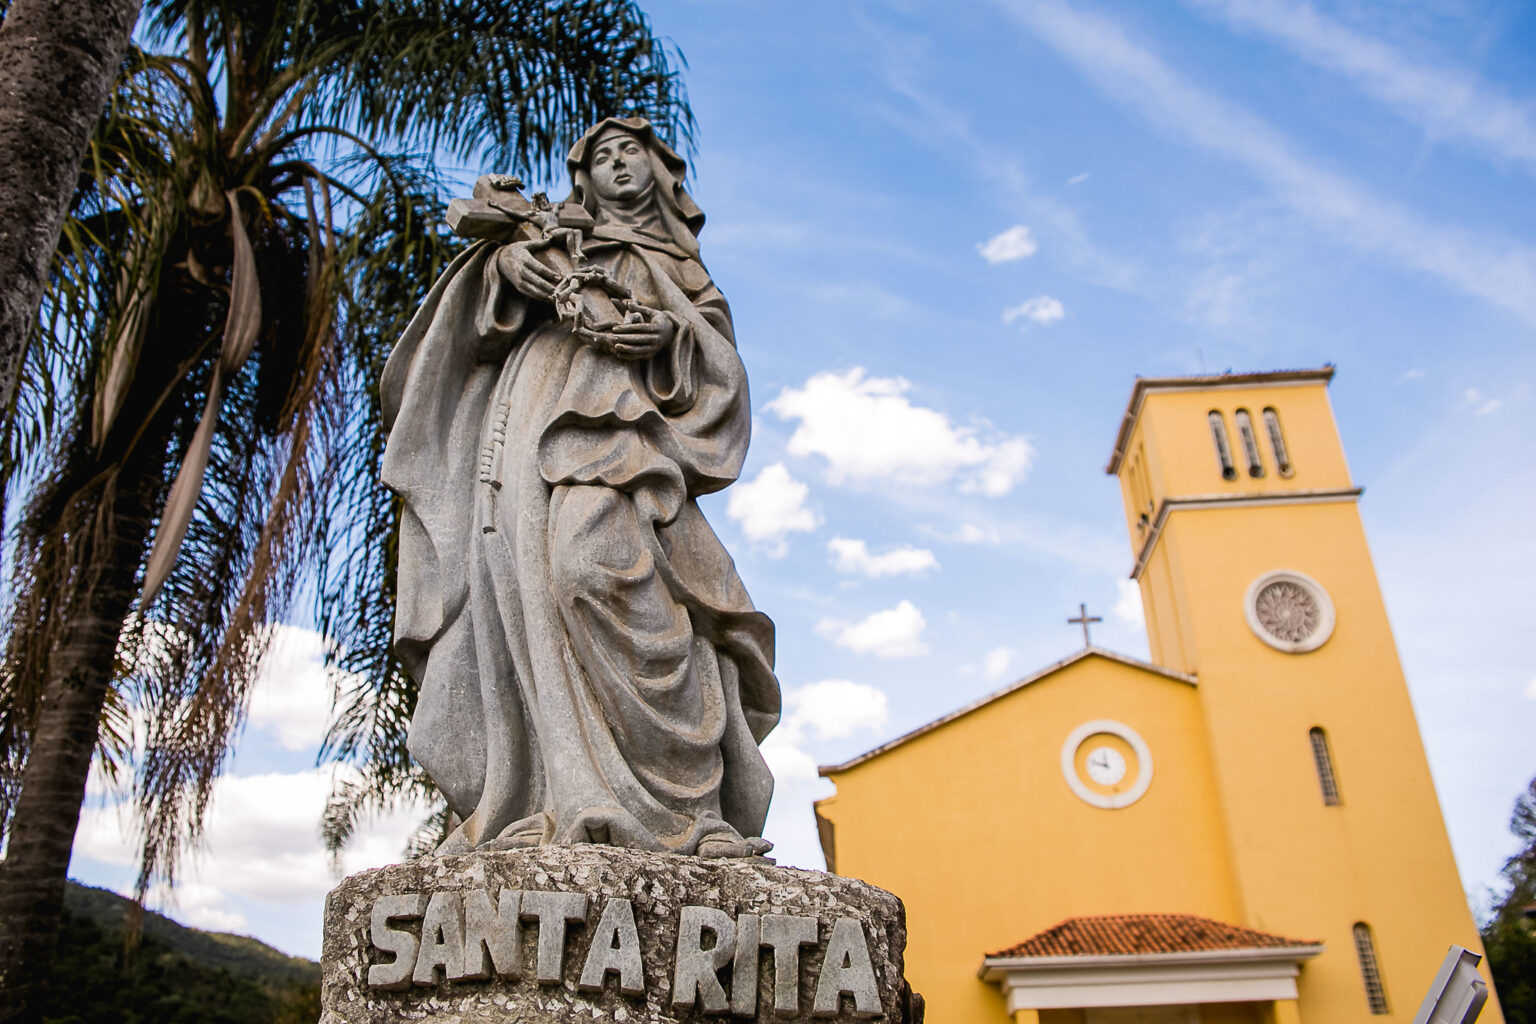 Festa de Santa Rita acontece neste fim de semana no distrito de Ouro preto